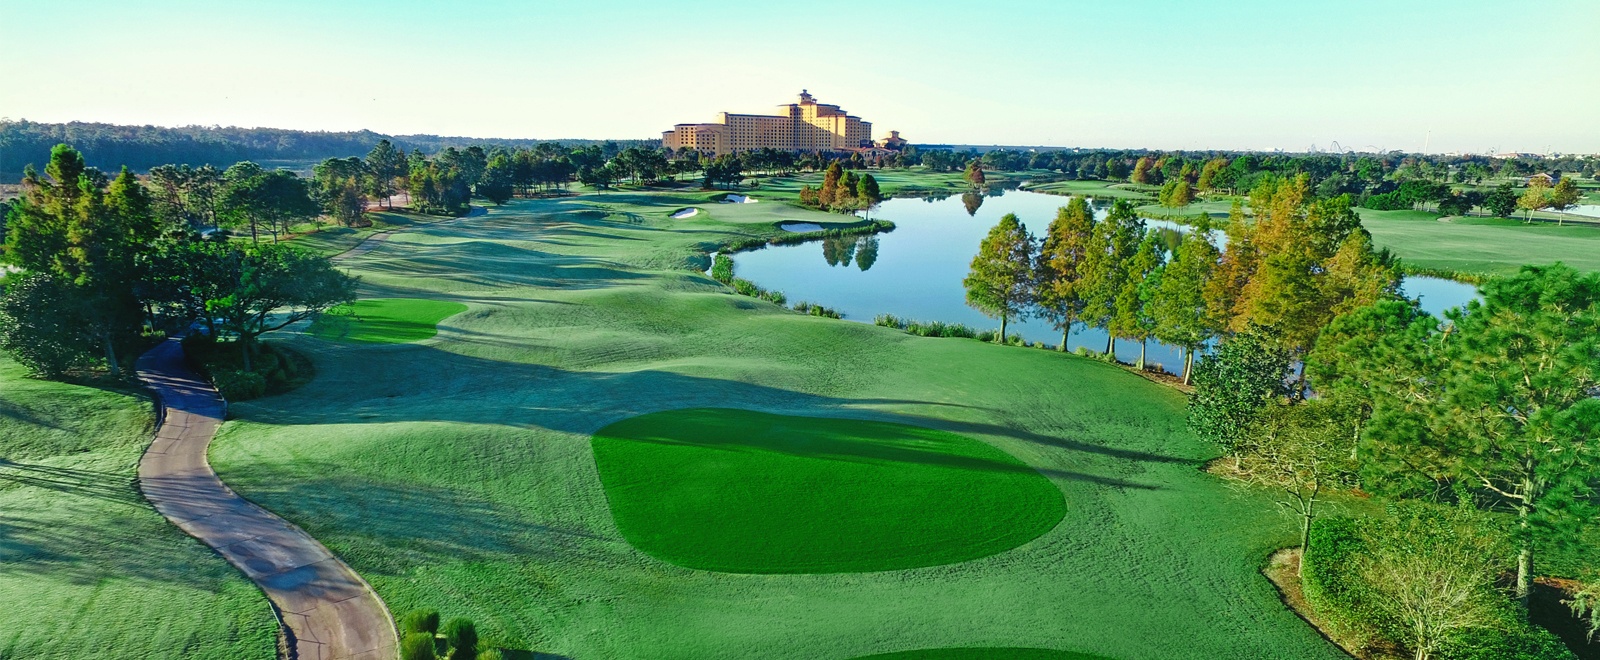 Orlando Golf And Resort | Orlando Golf Course | Rosen Shingle Creek®